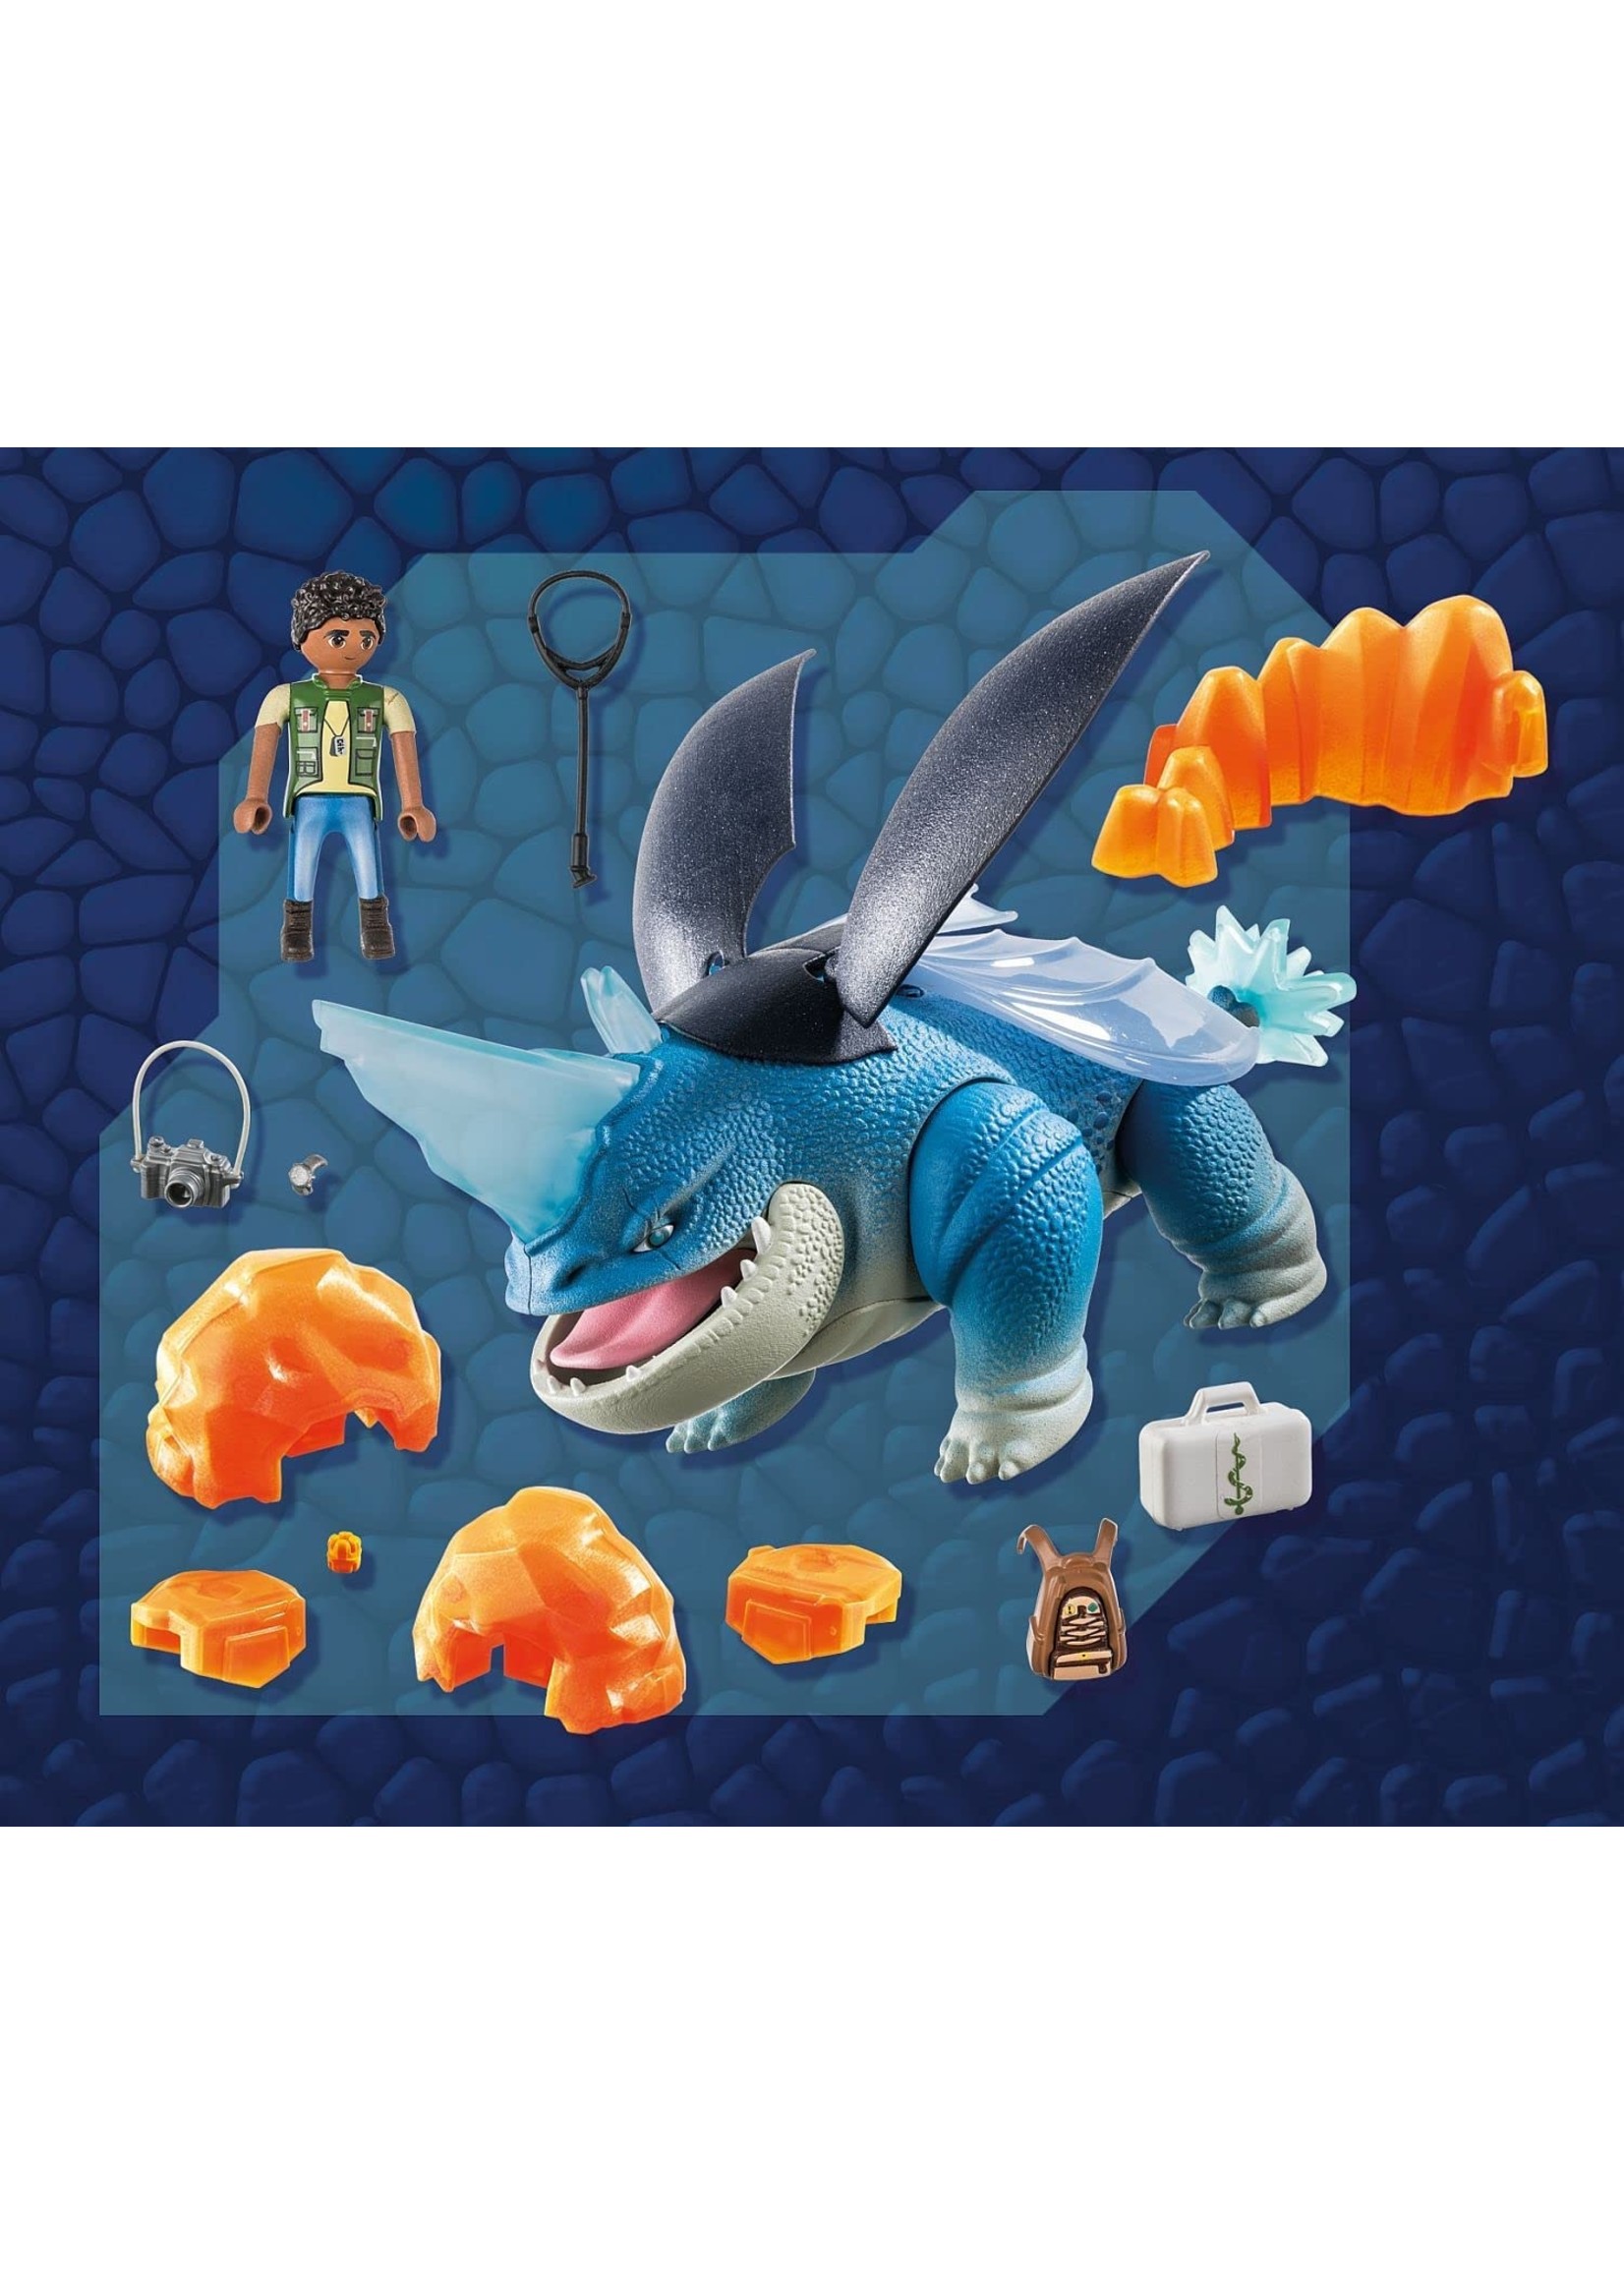 Playmobil Dragons Nine Realms: Plowhorn & D'Angelo